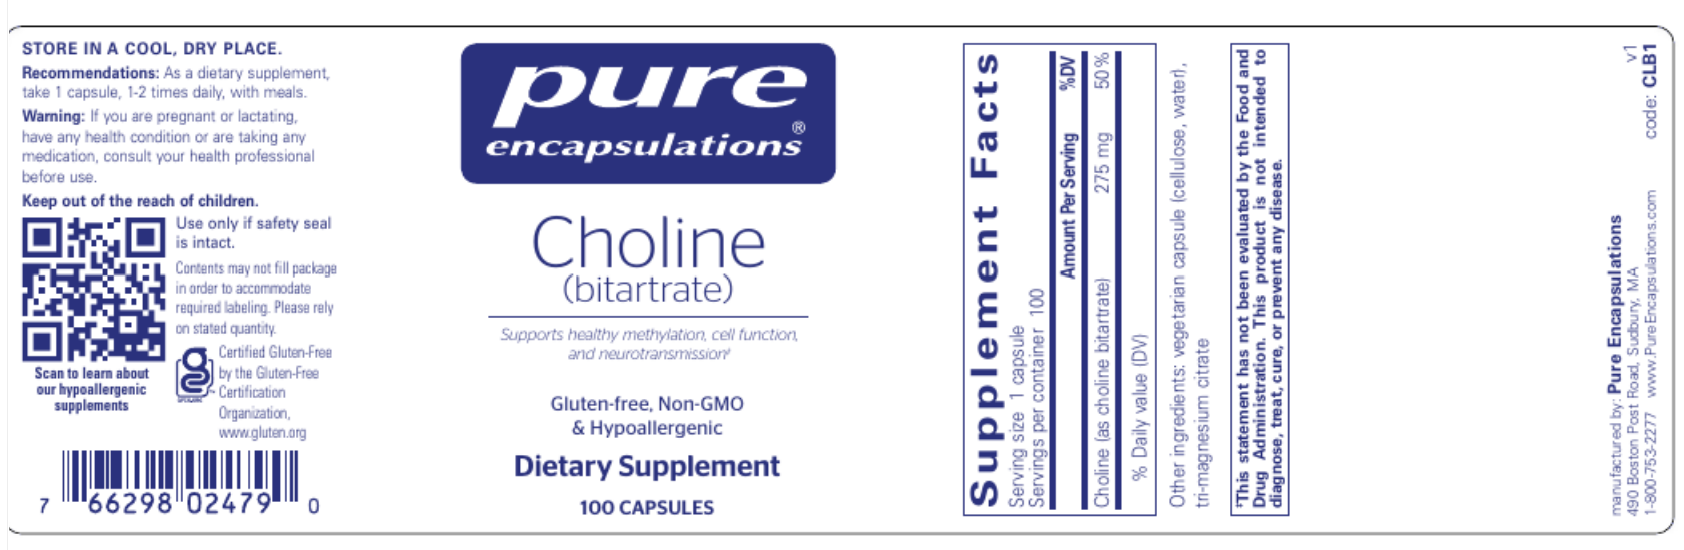 Choline (bitartrate) (100 Capsules)-Vitamins & Supplements-Pure Encapsulations-Pine Street Clinic